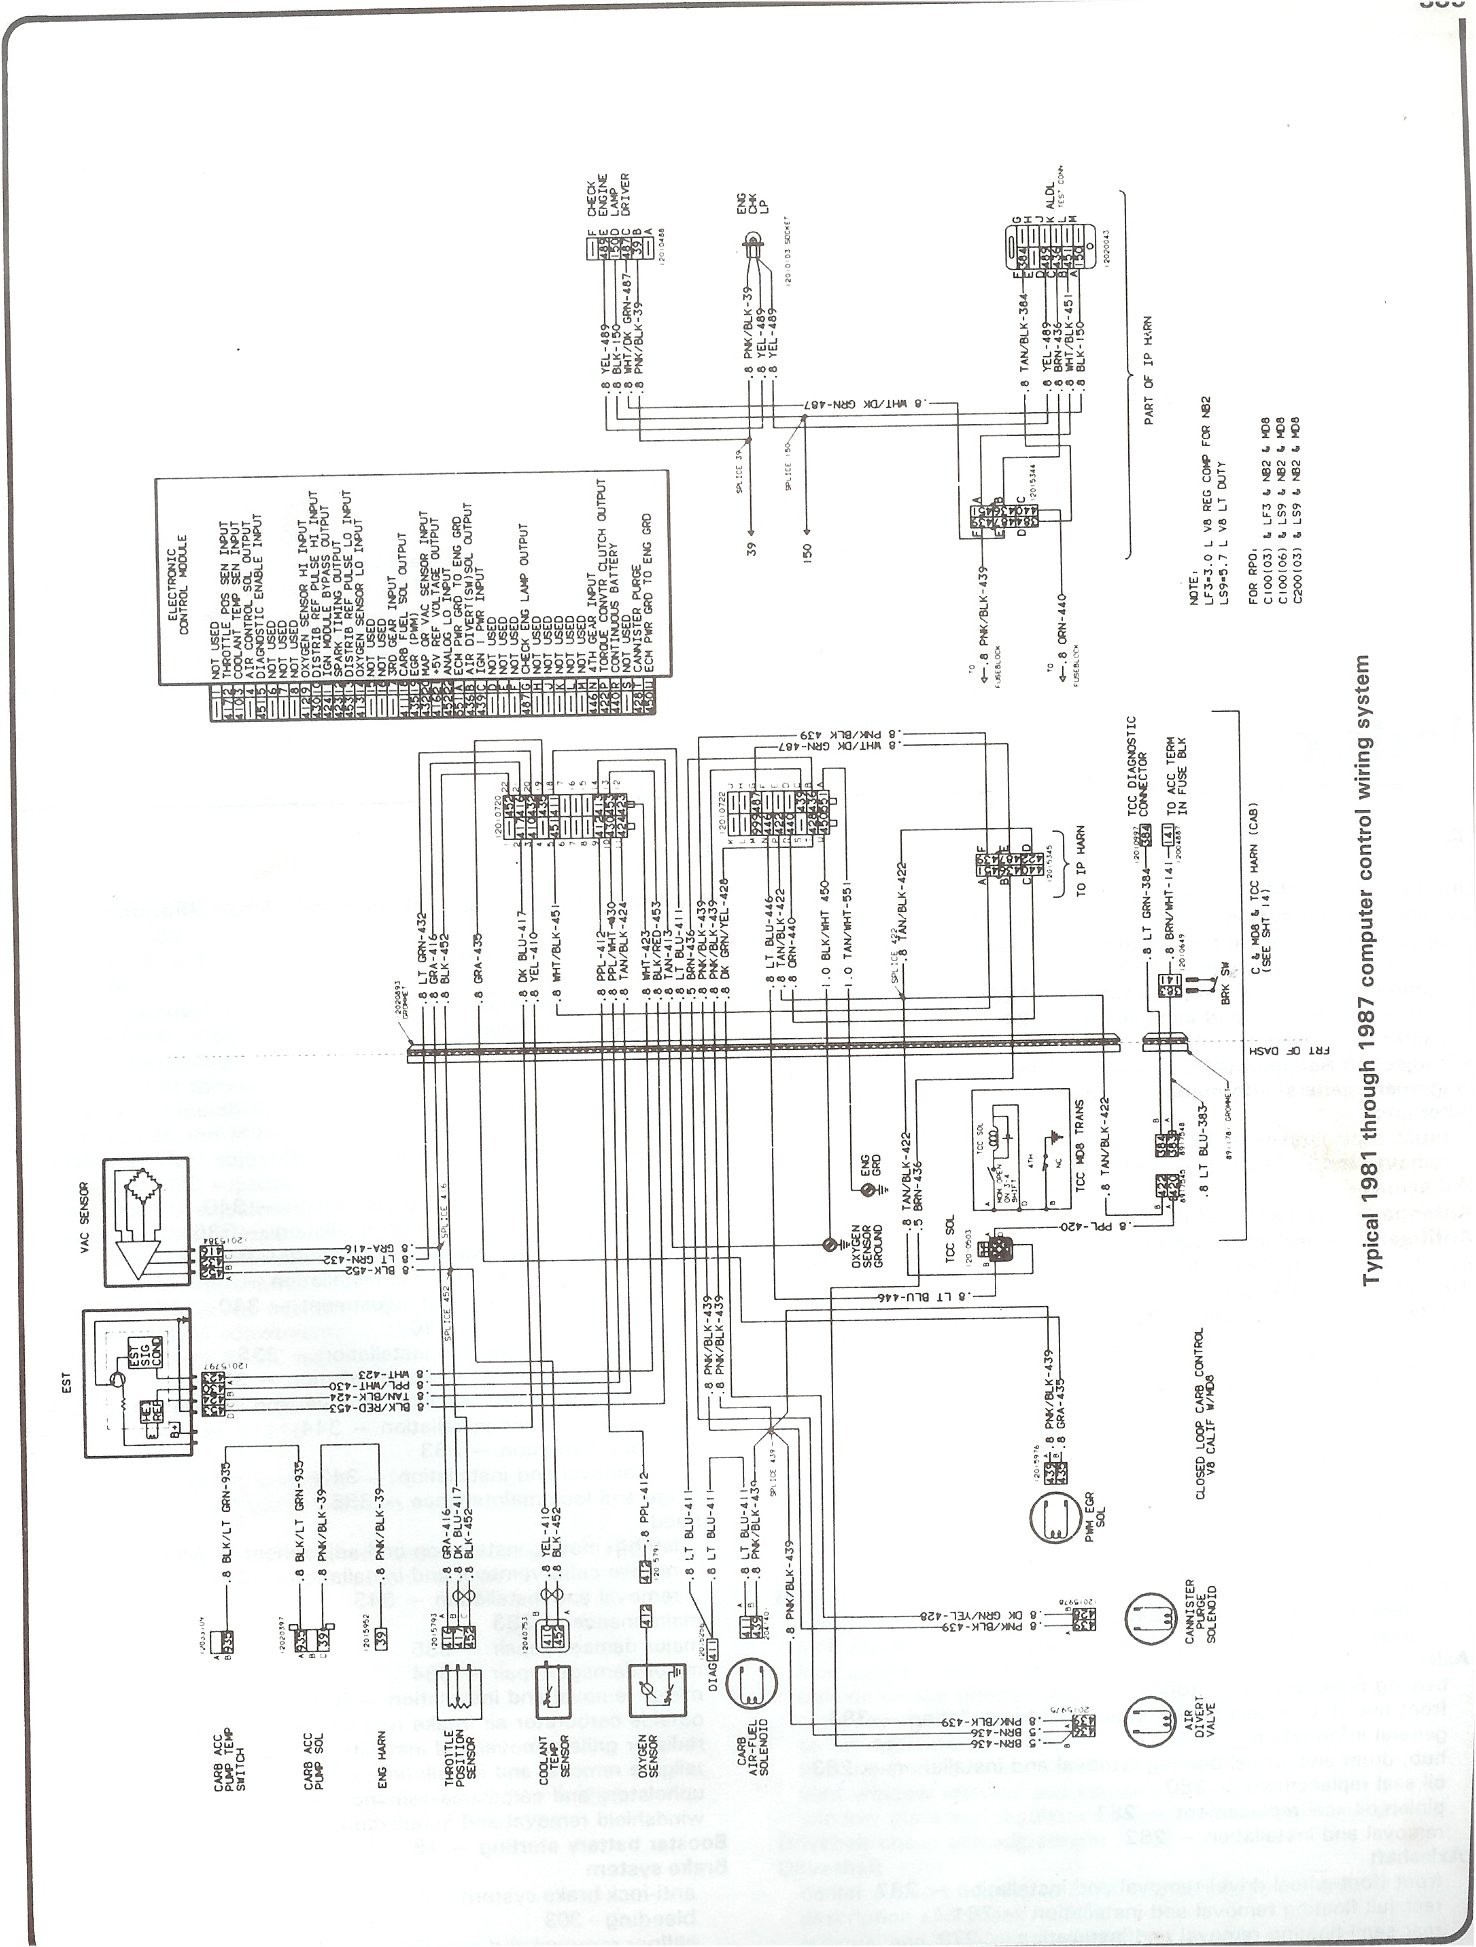 1987 Chevy Truck Wiring Diagram 2004 Chevy Silverado Instrument Cluster Wiring Diagram Plete 73 87 Of 1987 Chevy Truck Wiring Diagram